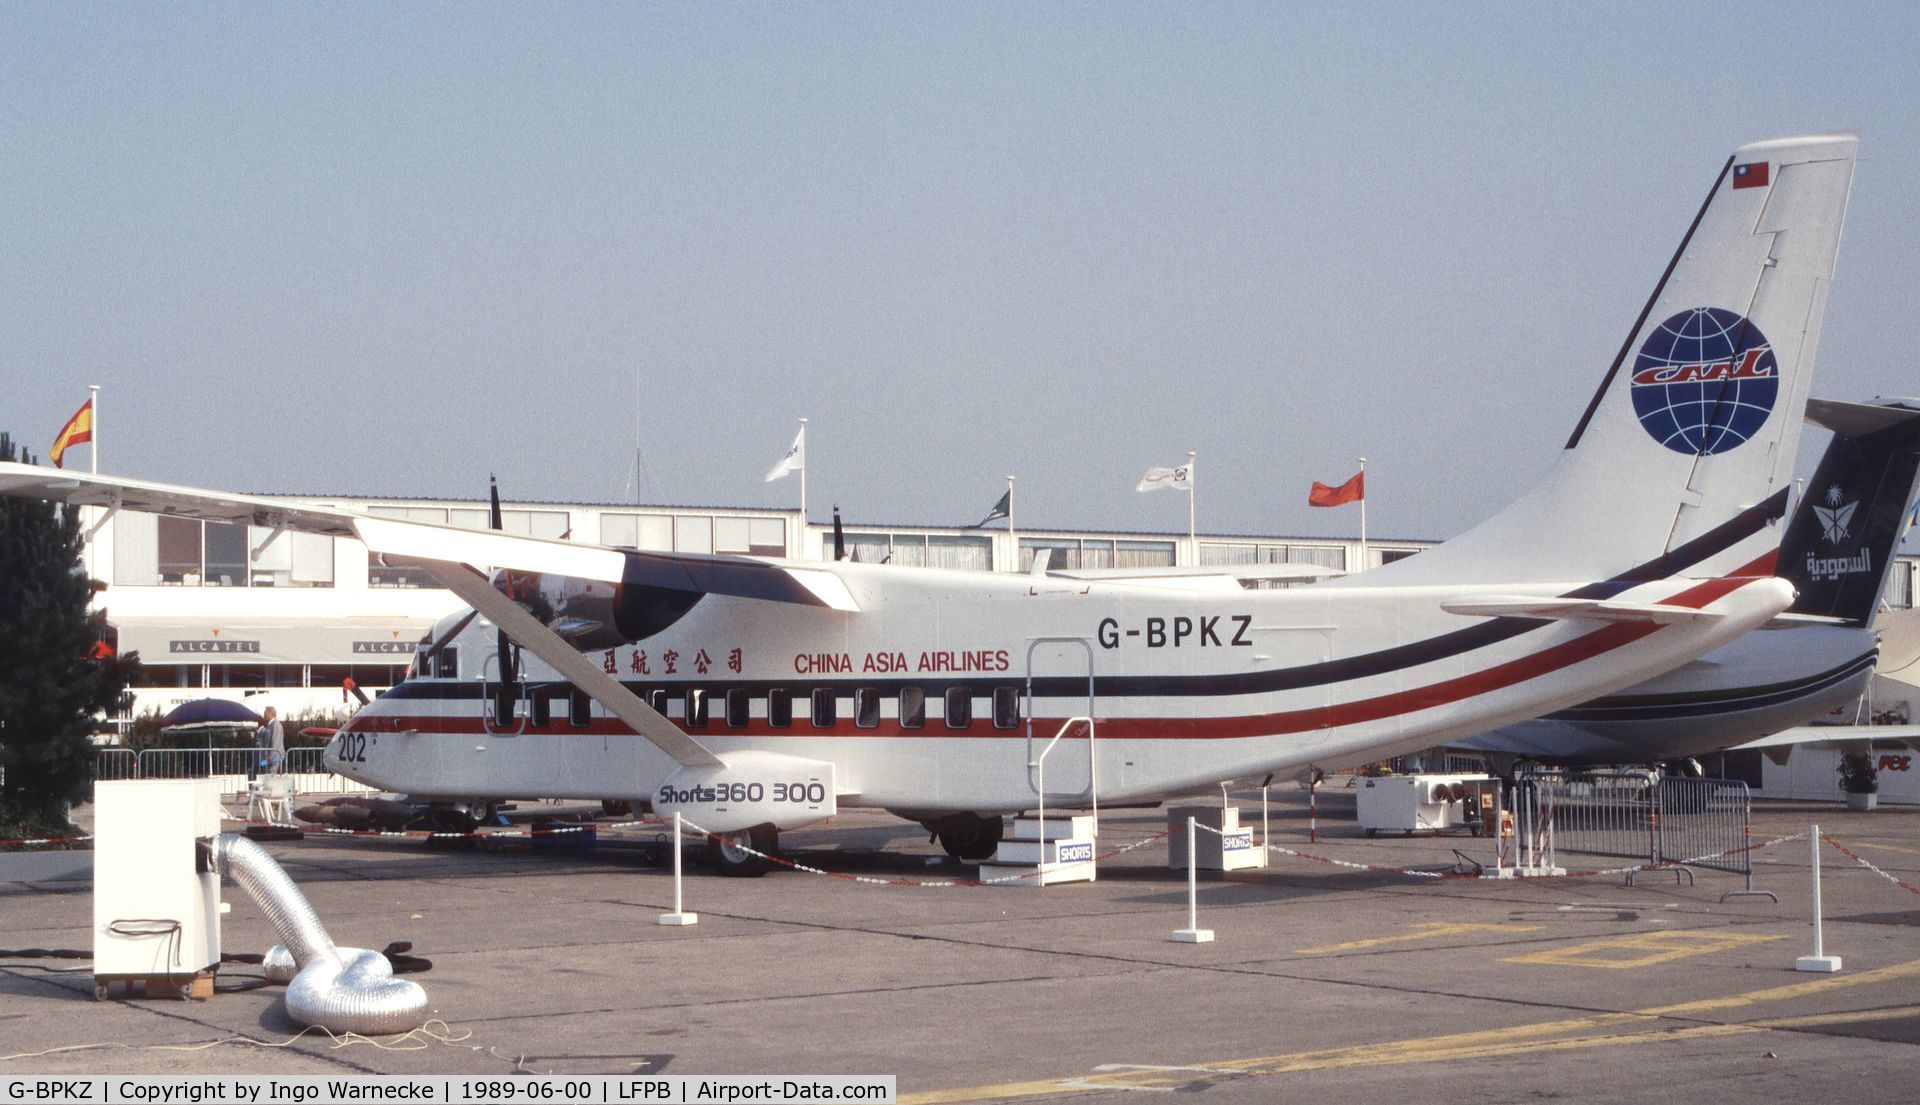 G-BPKZ, 1989 Short 360-100 C/N SH.3756, Shorts 360-300 of China Asia Airlines at the Aerosalon 1989, Paris